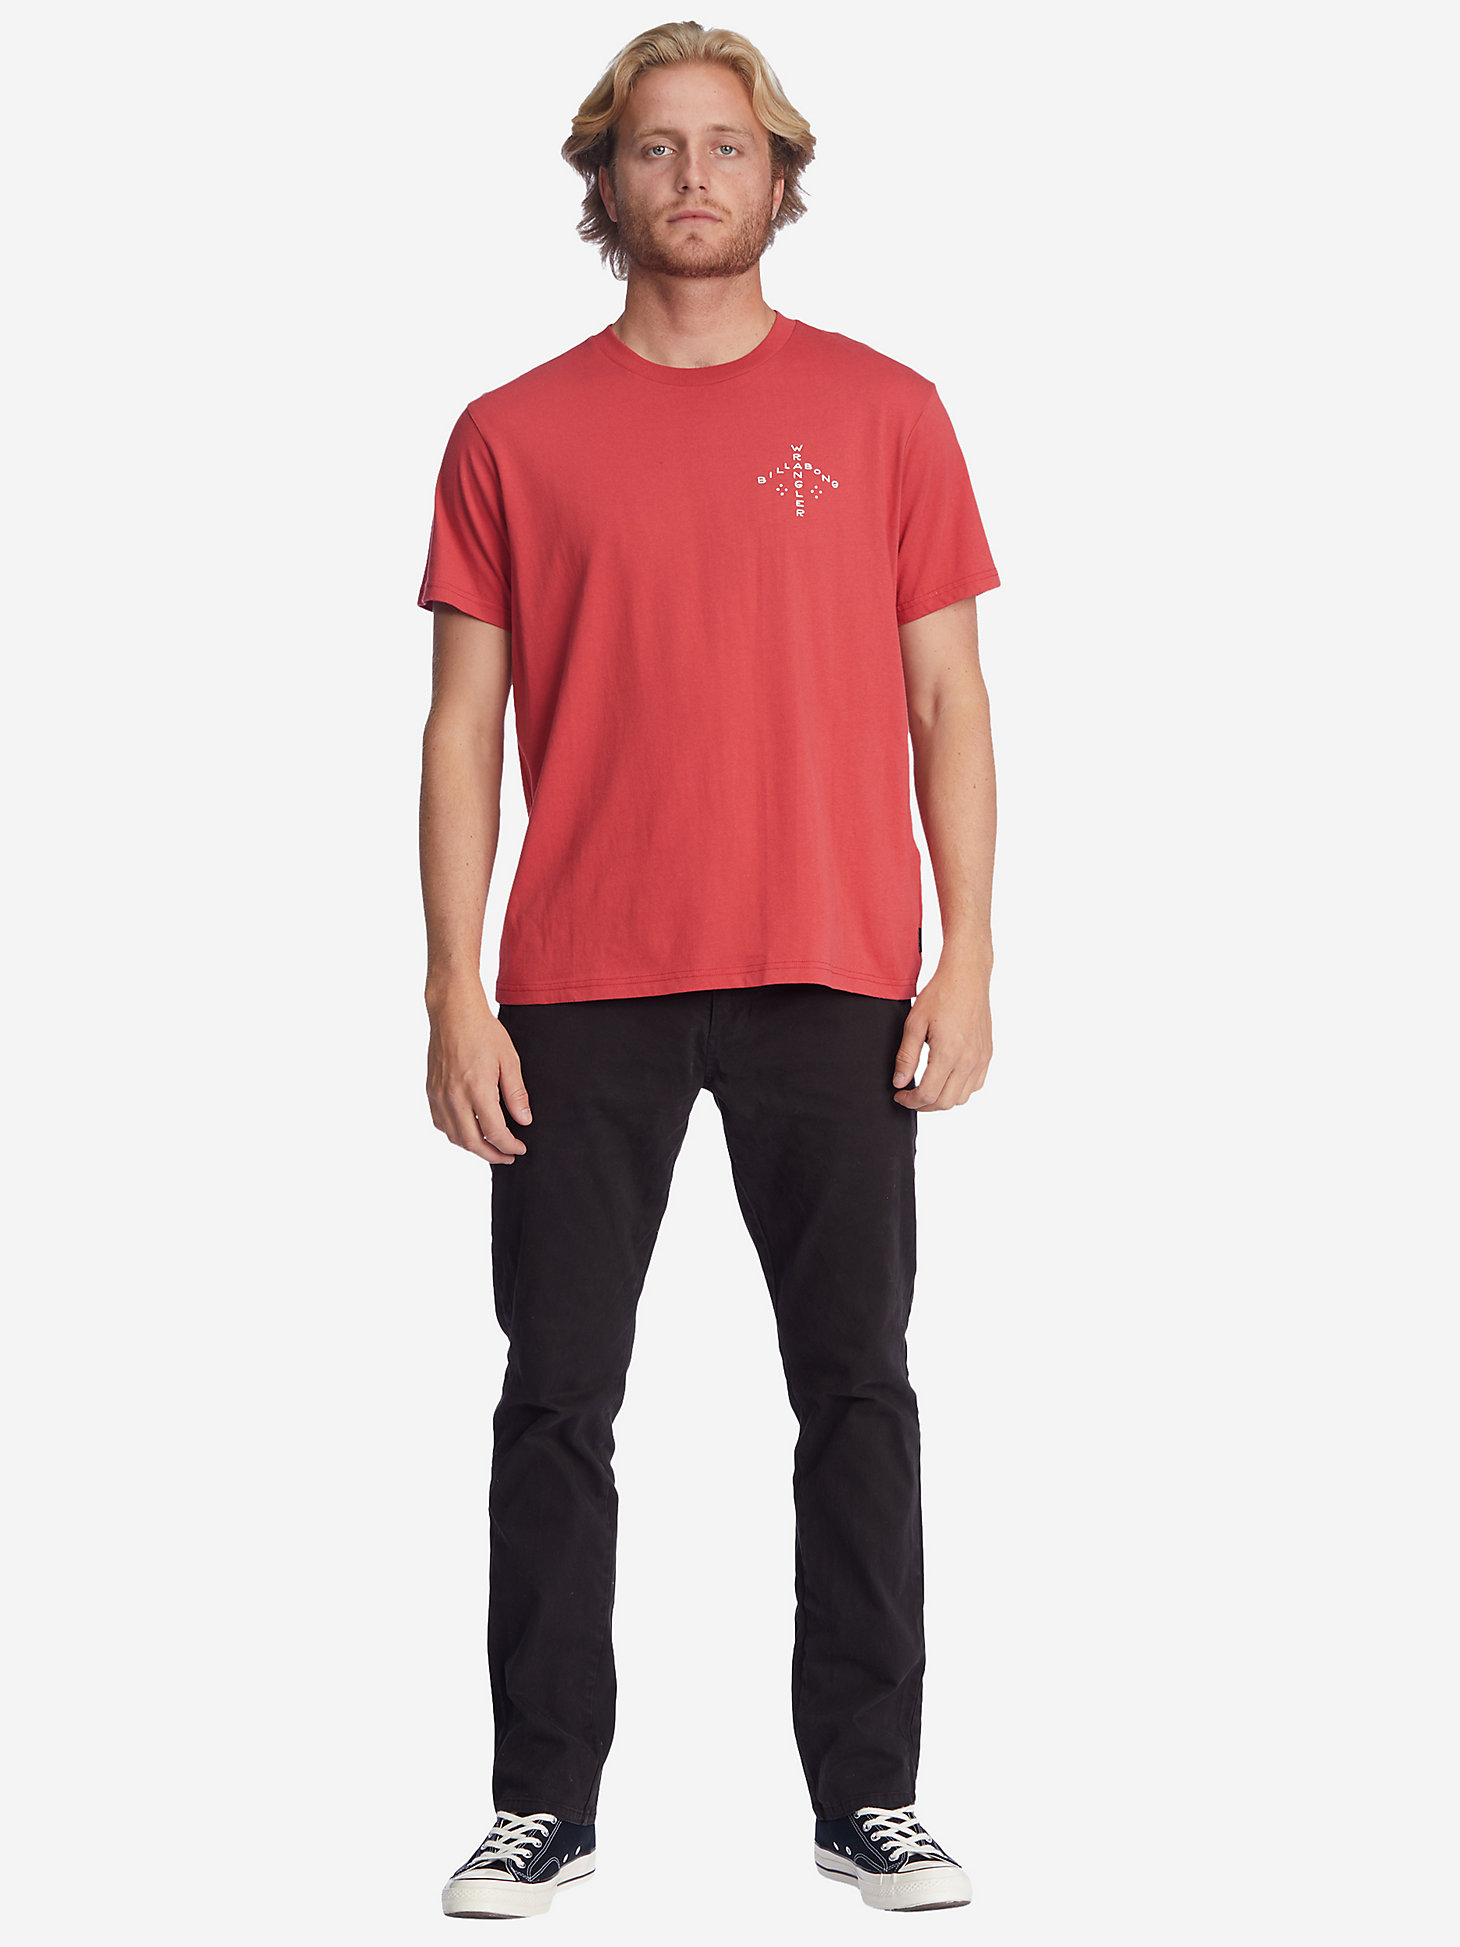 Billabong x Wrangler® Men's Rancher Horizon Graphic T-Shirt in Washed Red alternative view 6